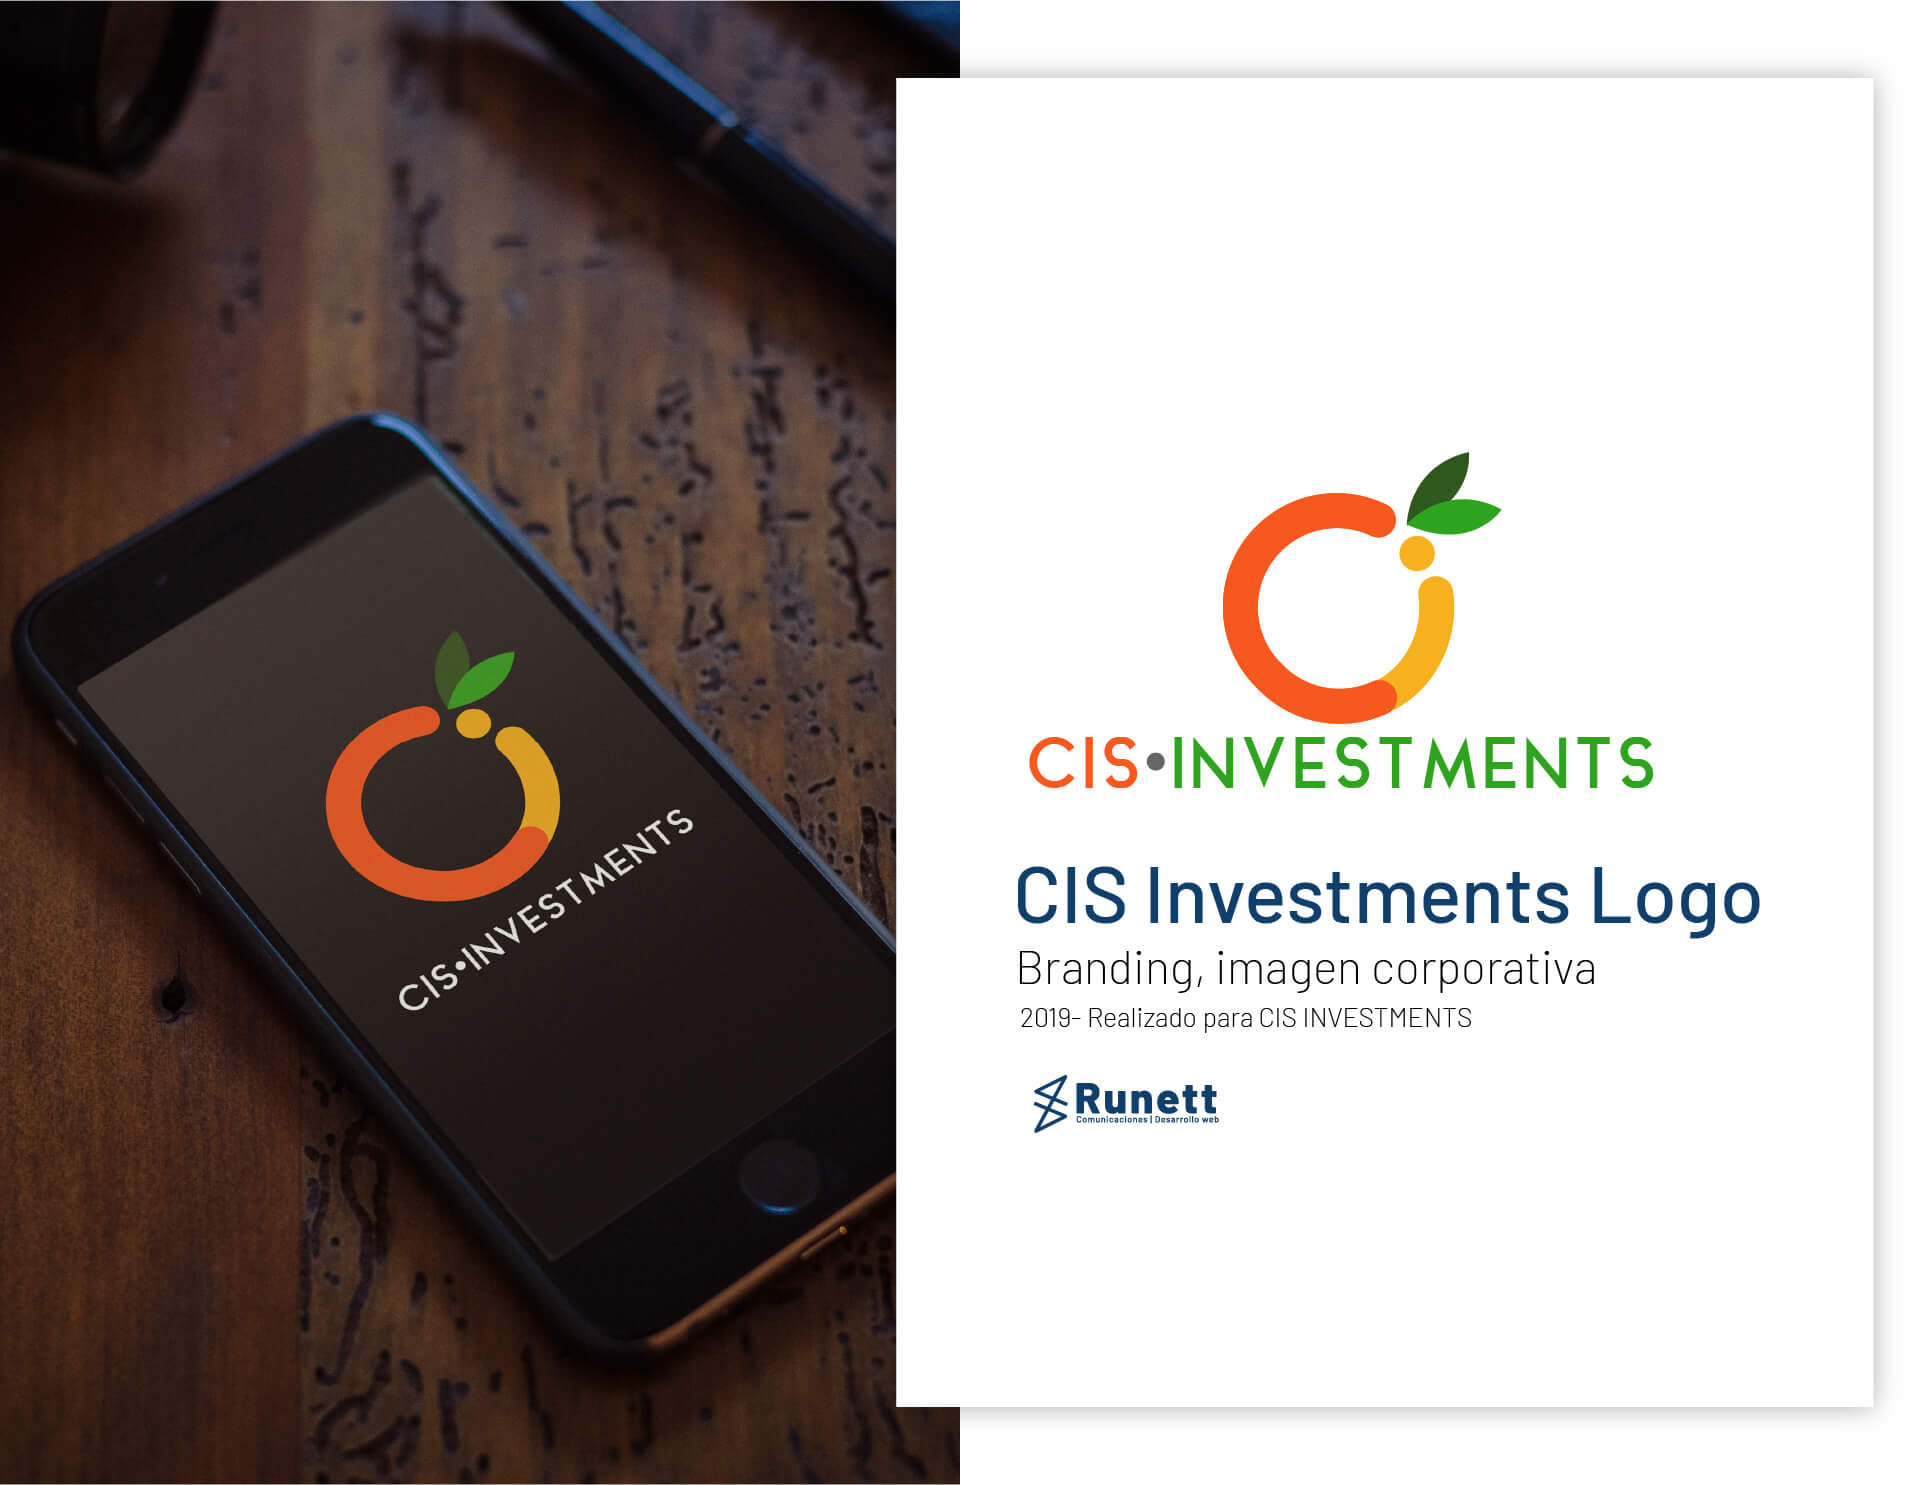 Cis investments logo